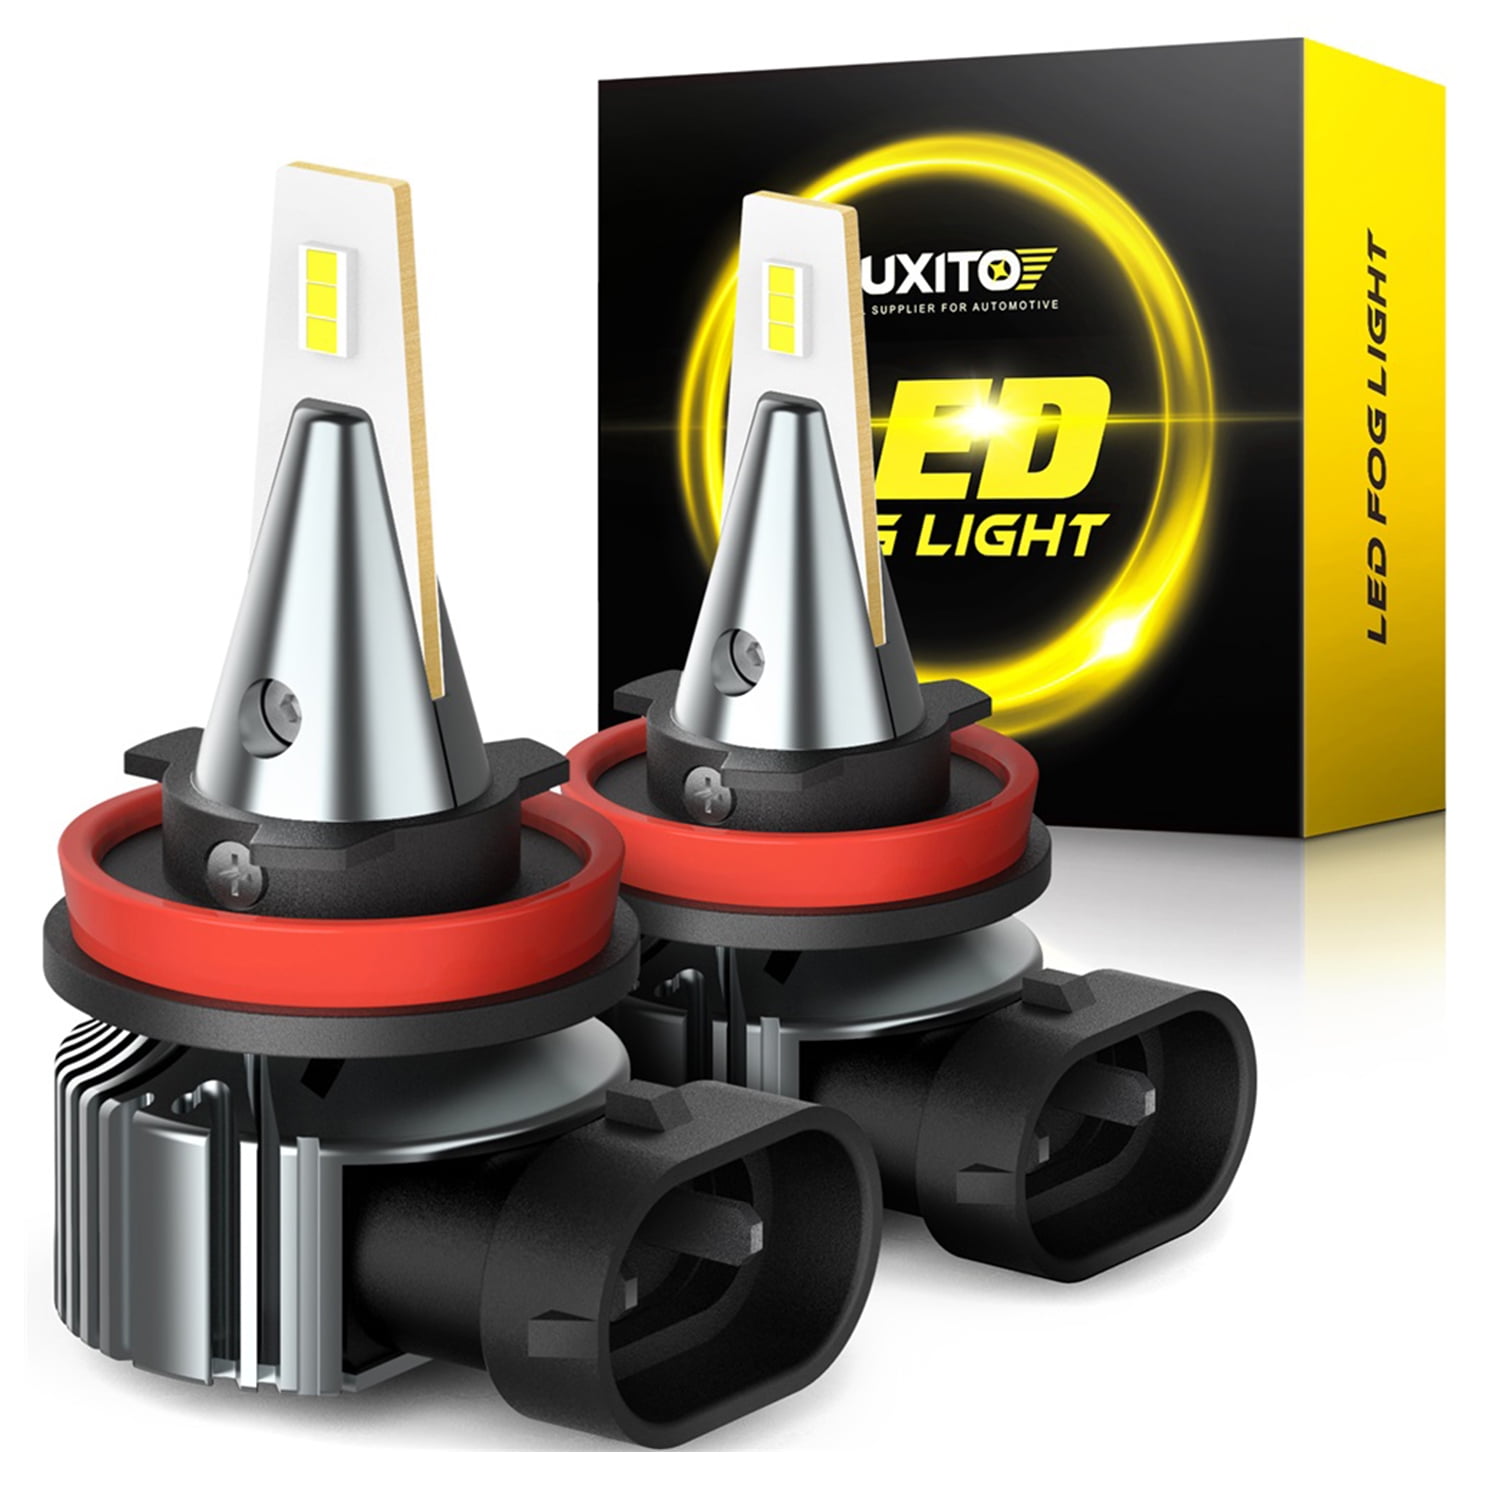 AUXITO H11(H8, H16) LED Fog Light Bulbs with CSP LED Chips 6500K Lamps for Fog Lights or Daytime Running Lights DRL, Pack of 2 - Walmart.com